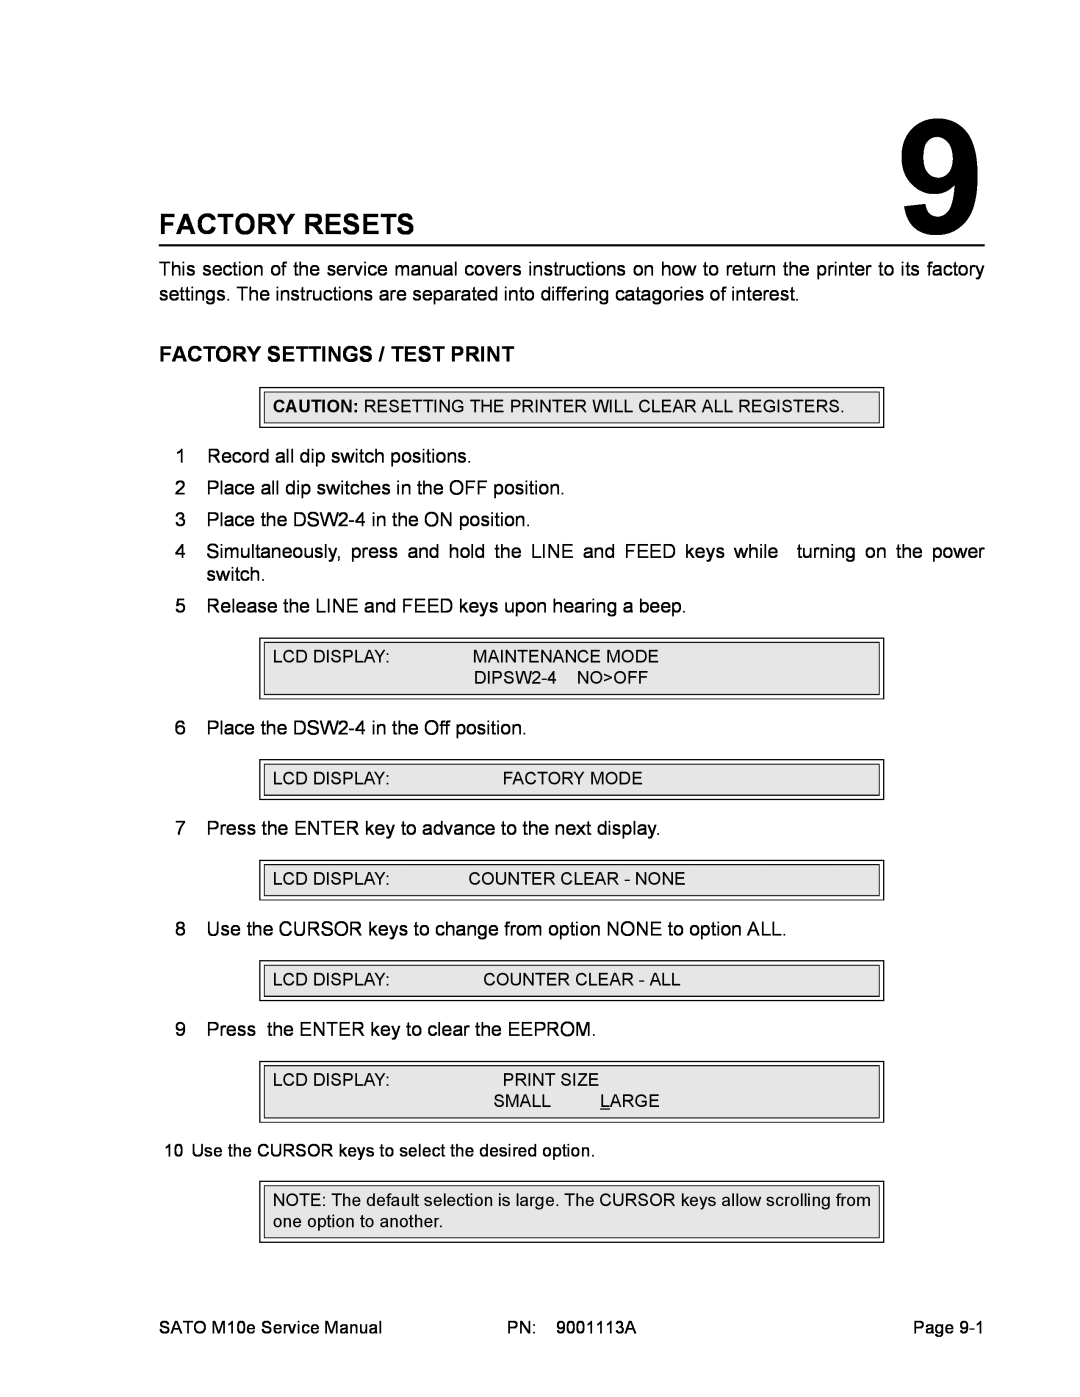 SATO 10e service manual Factory Resets, Factory Settings / Test Print 